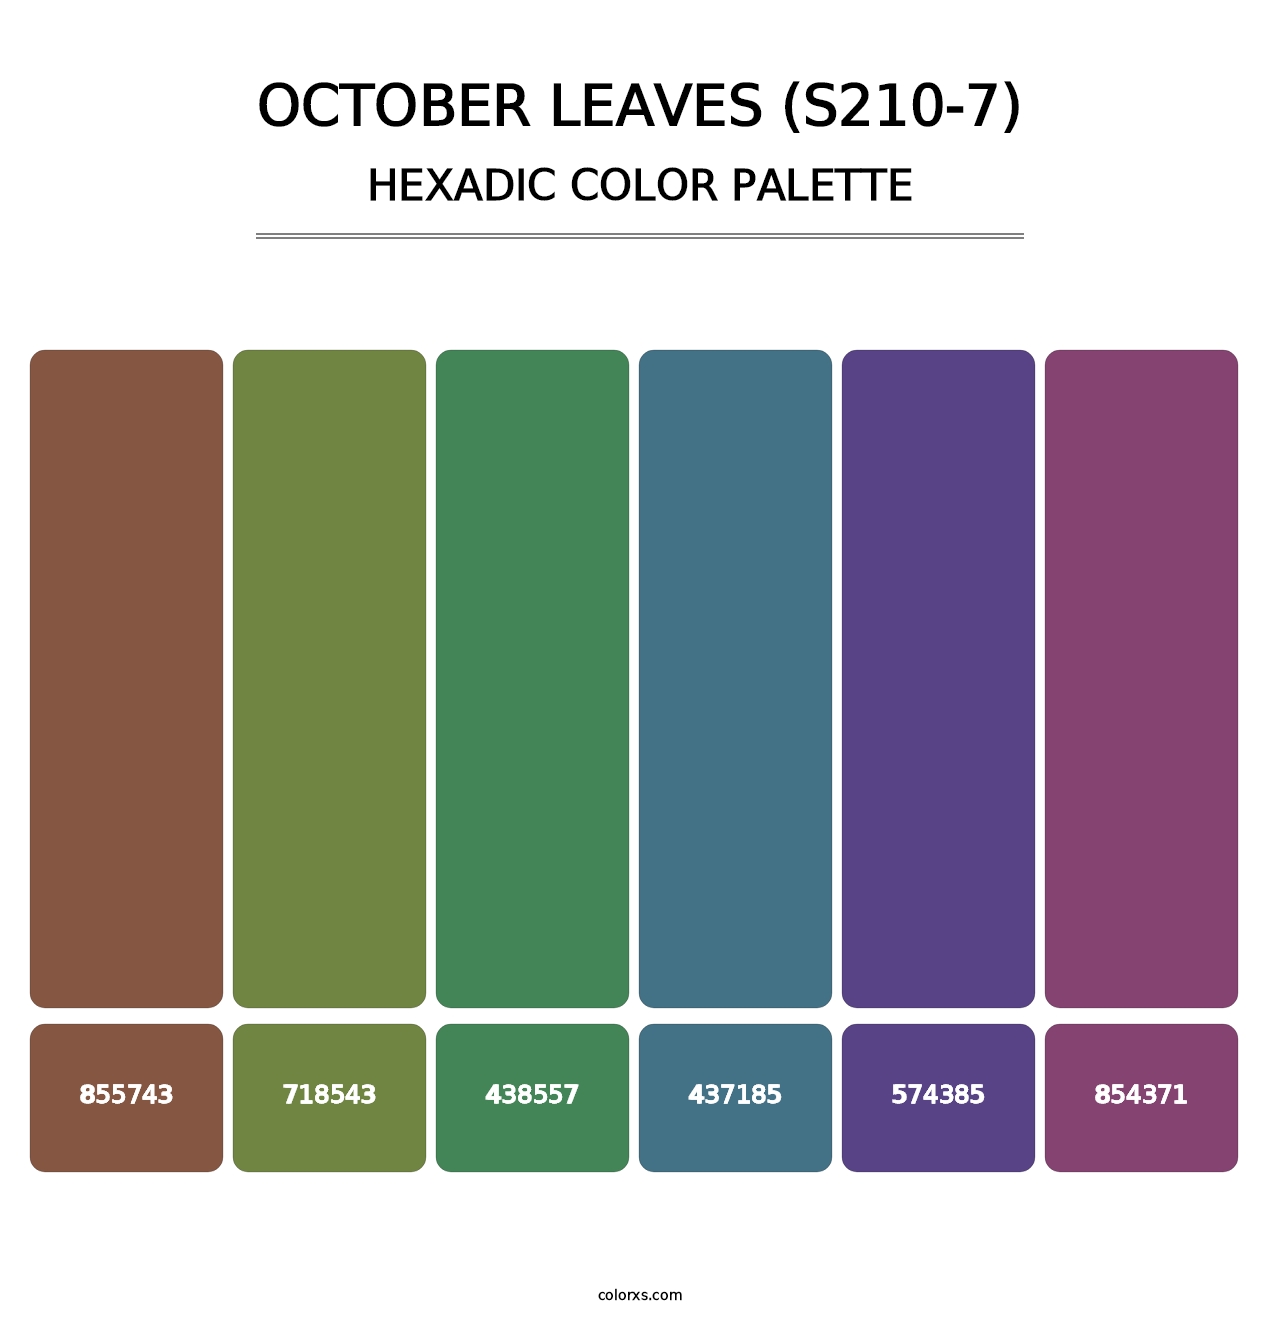 October Leaves (S210-7) - Hexadic Color Palette